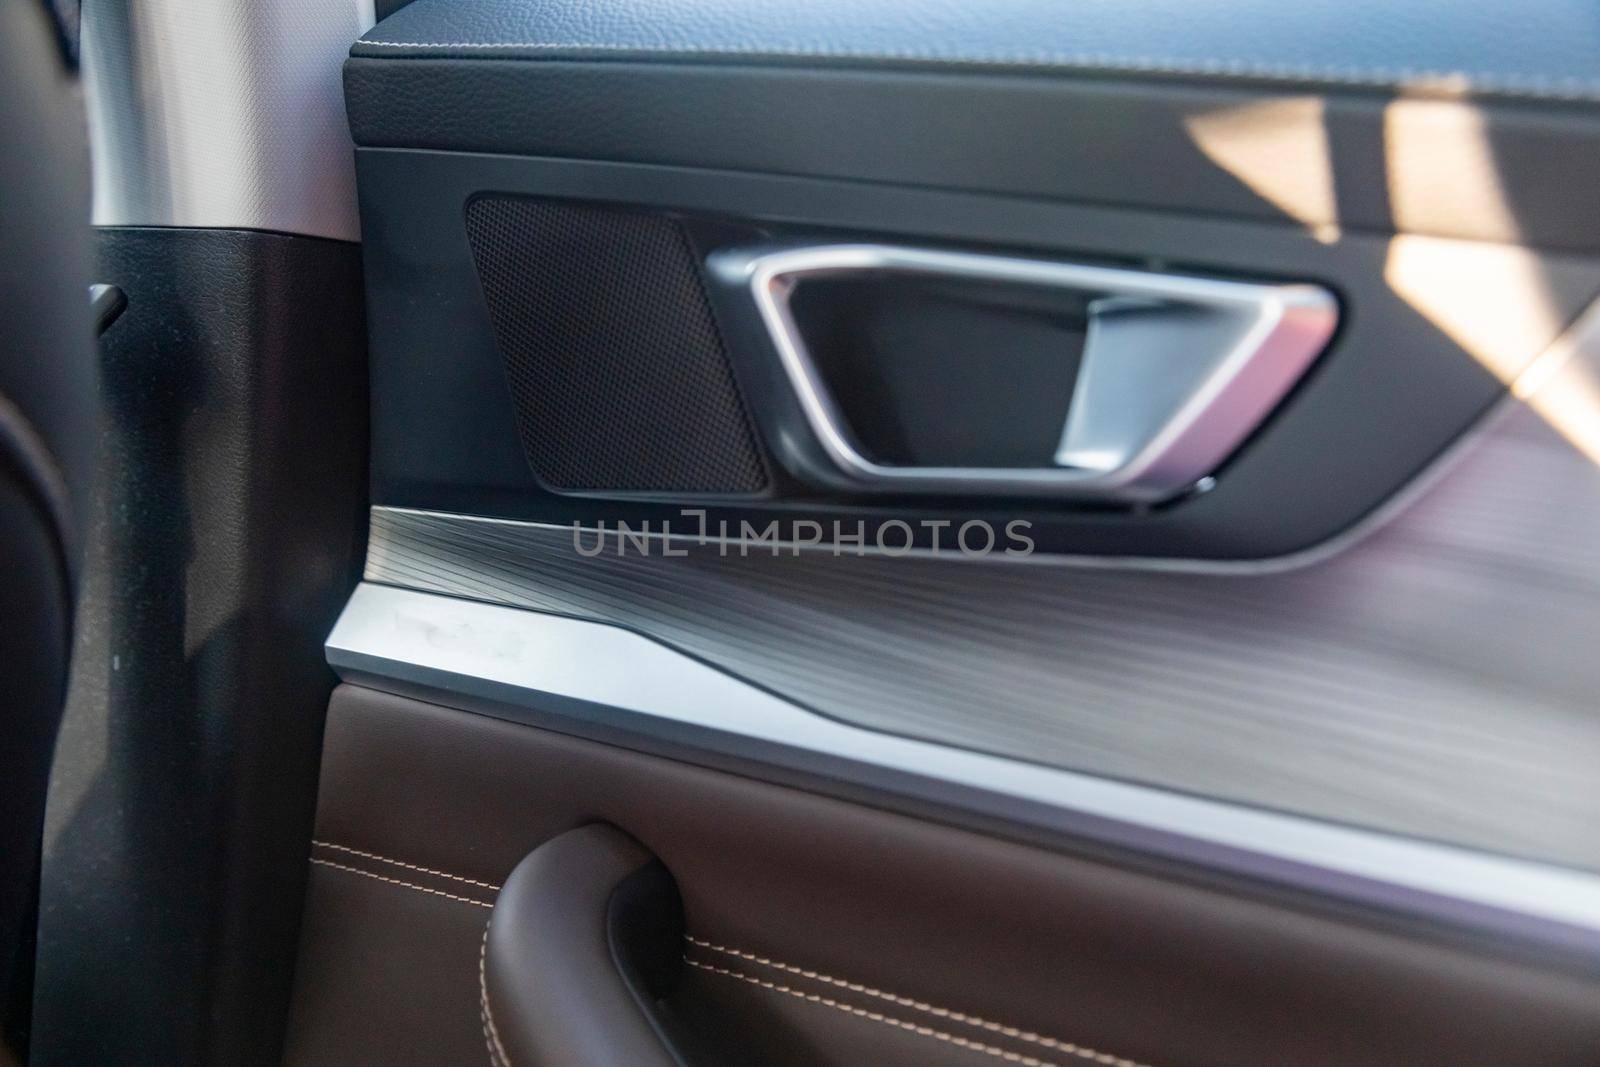 interior door handle of a modern premium car close-up by Mariaprovector